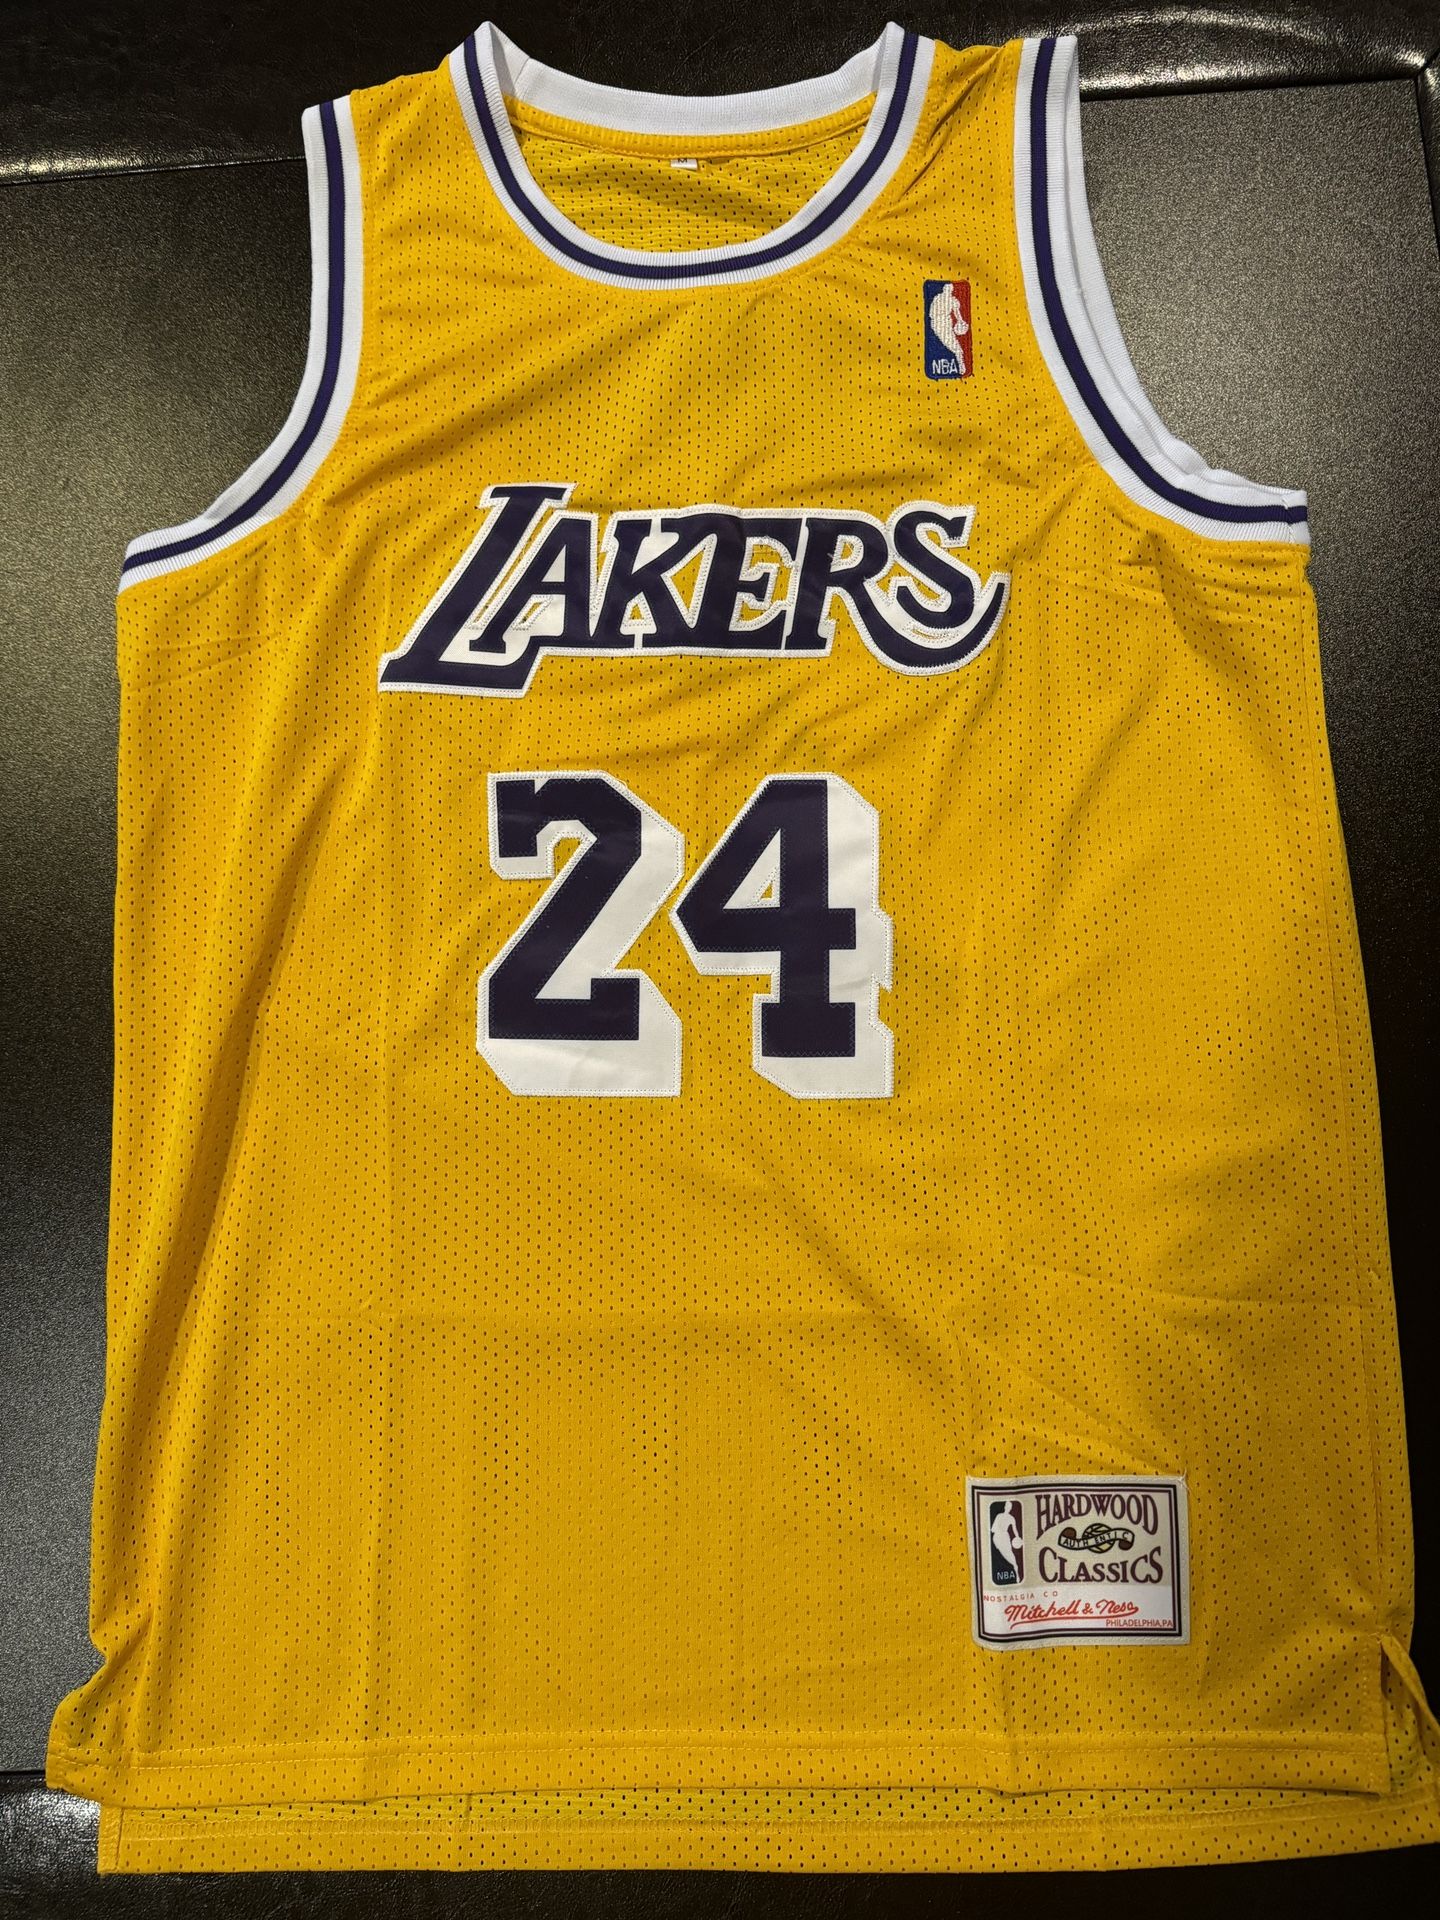 Throwback Lakers Kobe Bryant 24 Jersey